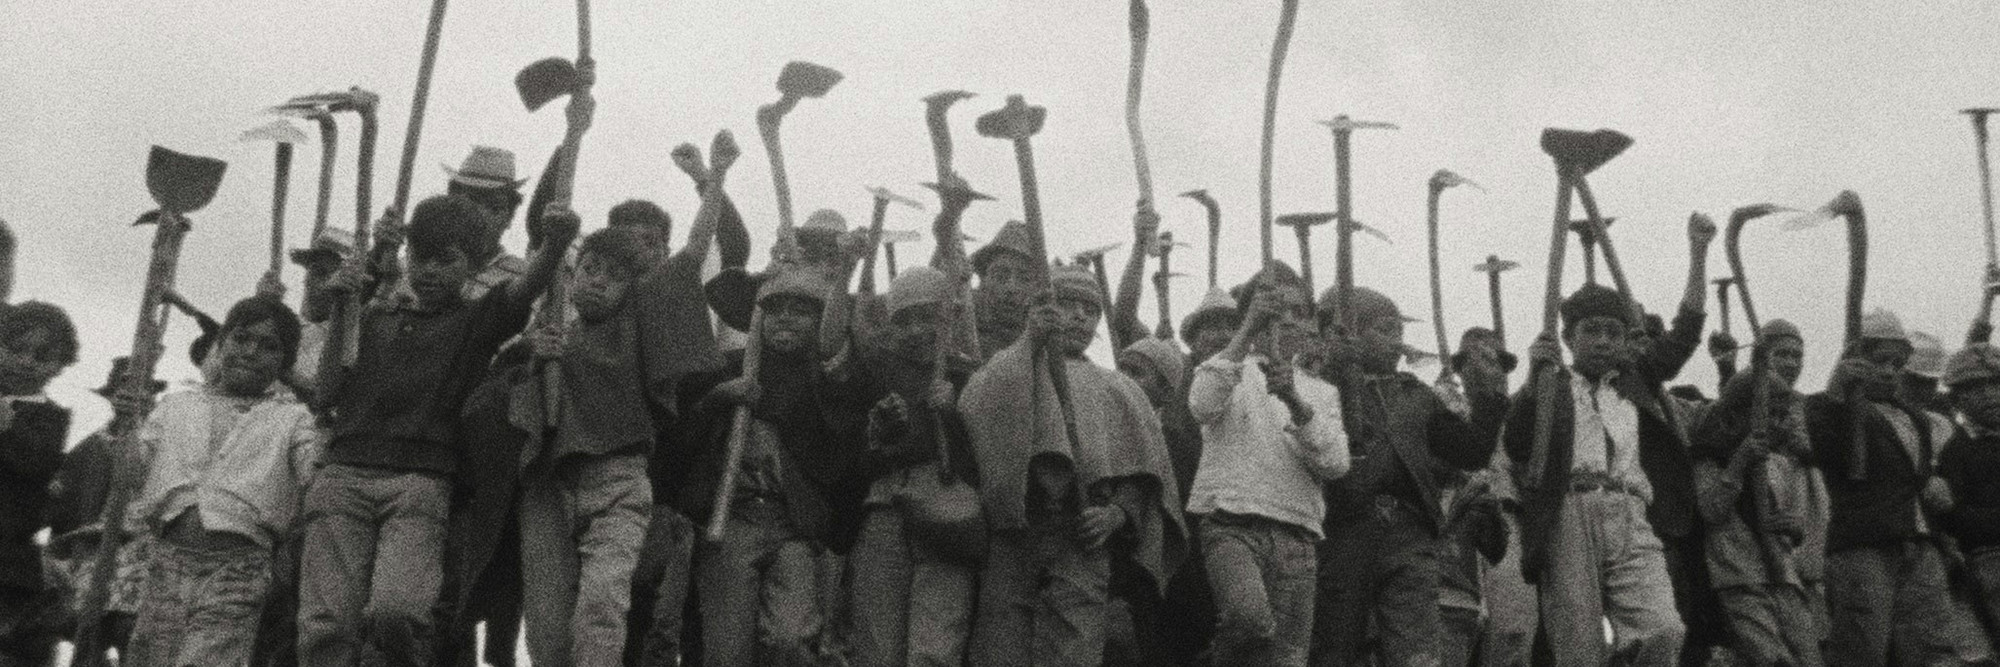 Nuestra voz de tierra, memoria y futuro (Our Voice of Earth, Memory and Future). 1981. Colombia. Directed and written by Marta Rodríguez and Jorge Silva. Courtesy Arsenal Berlin